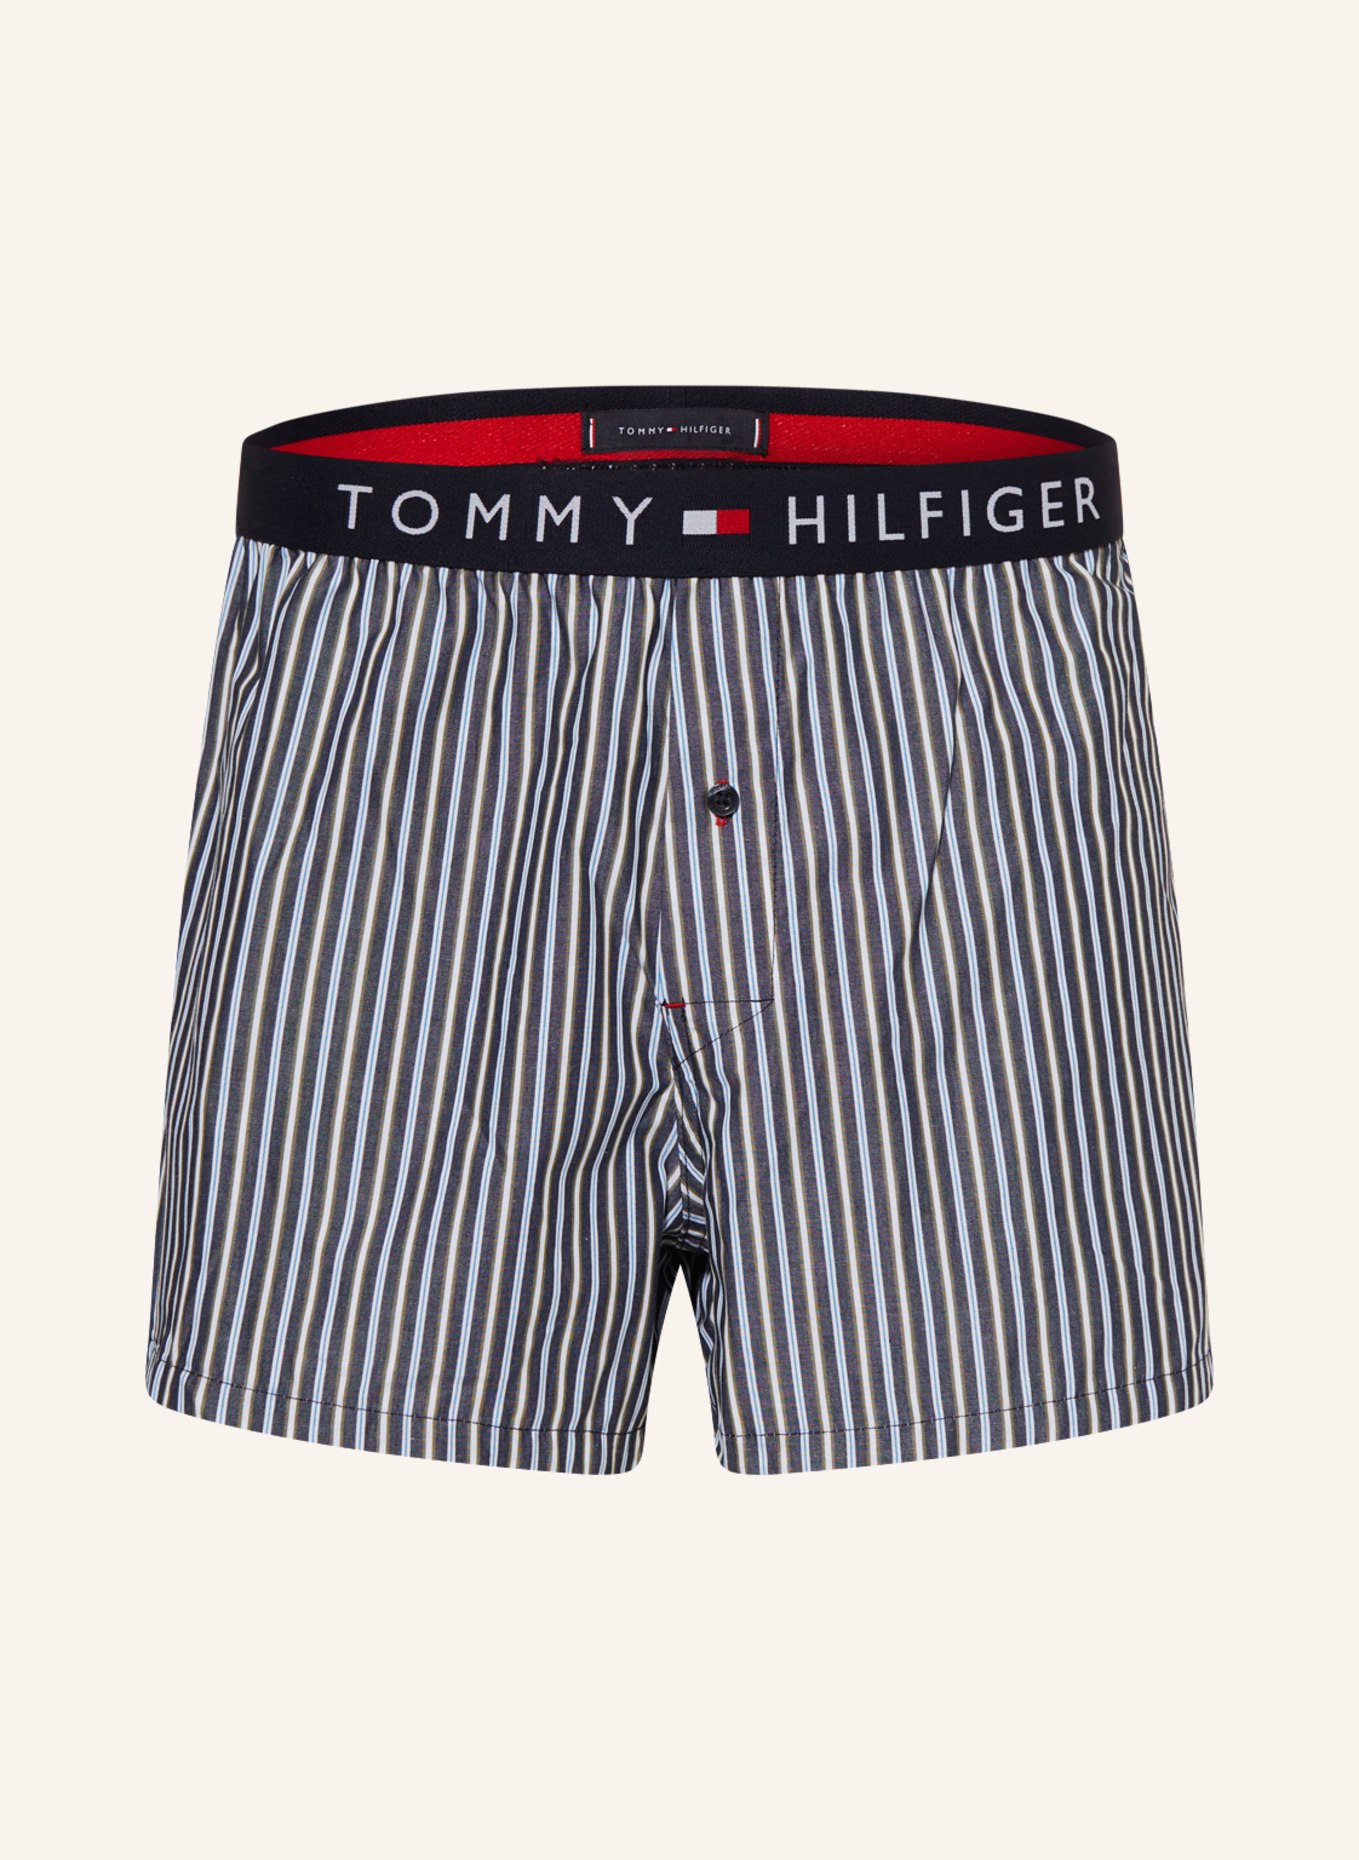 TOMMY HILFIGER Web-Boxershorts, Farbe: GRAU/ WEISS (Bild 1)